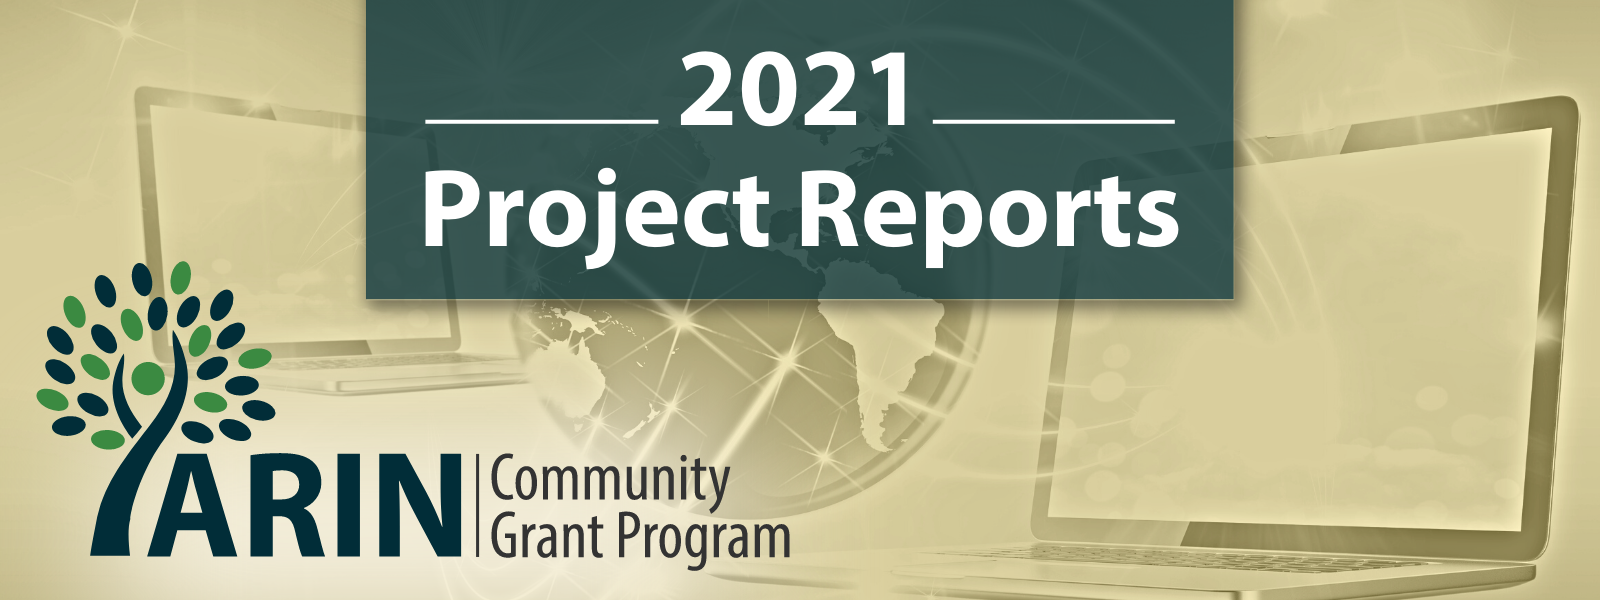 ARIN Community Grant Program 2021 Project Reports